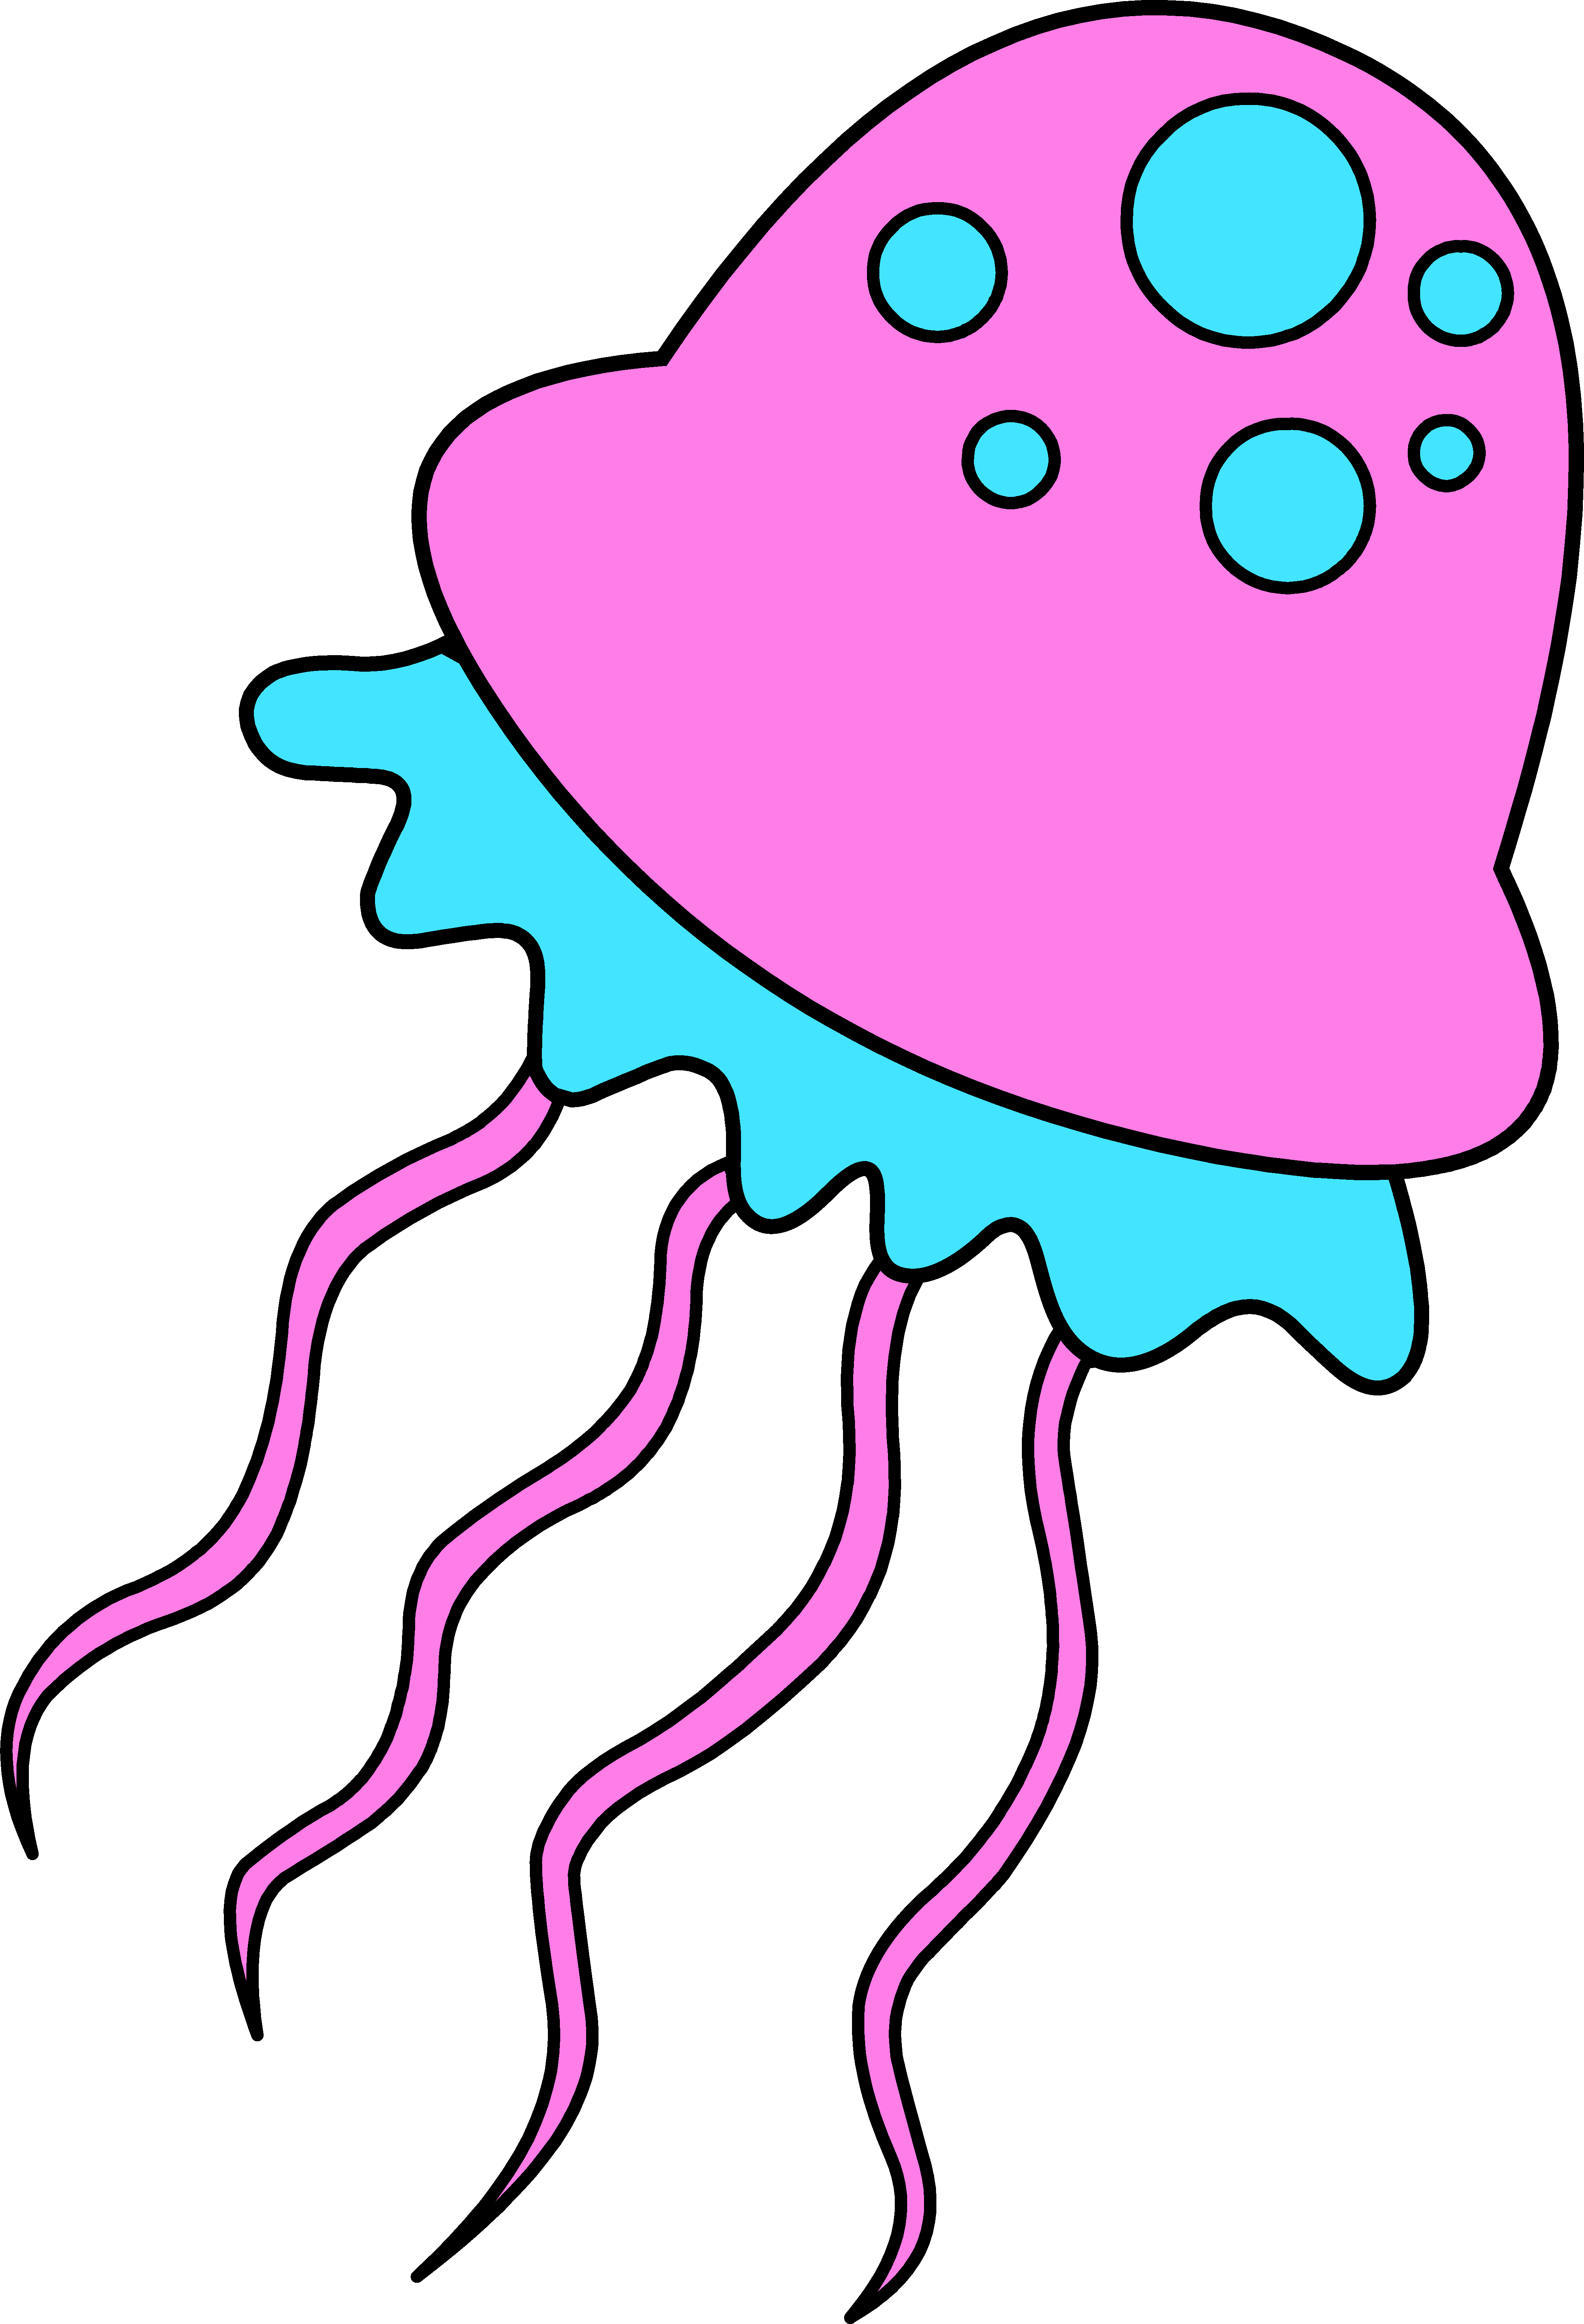 Squid clipart sea life. Jellyfish clip art pink